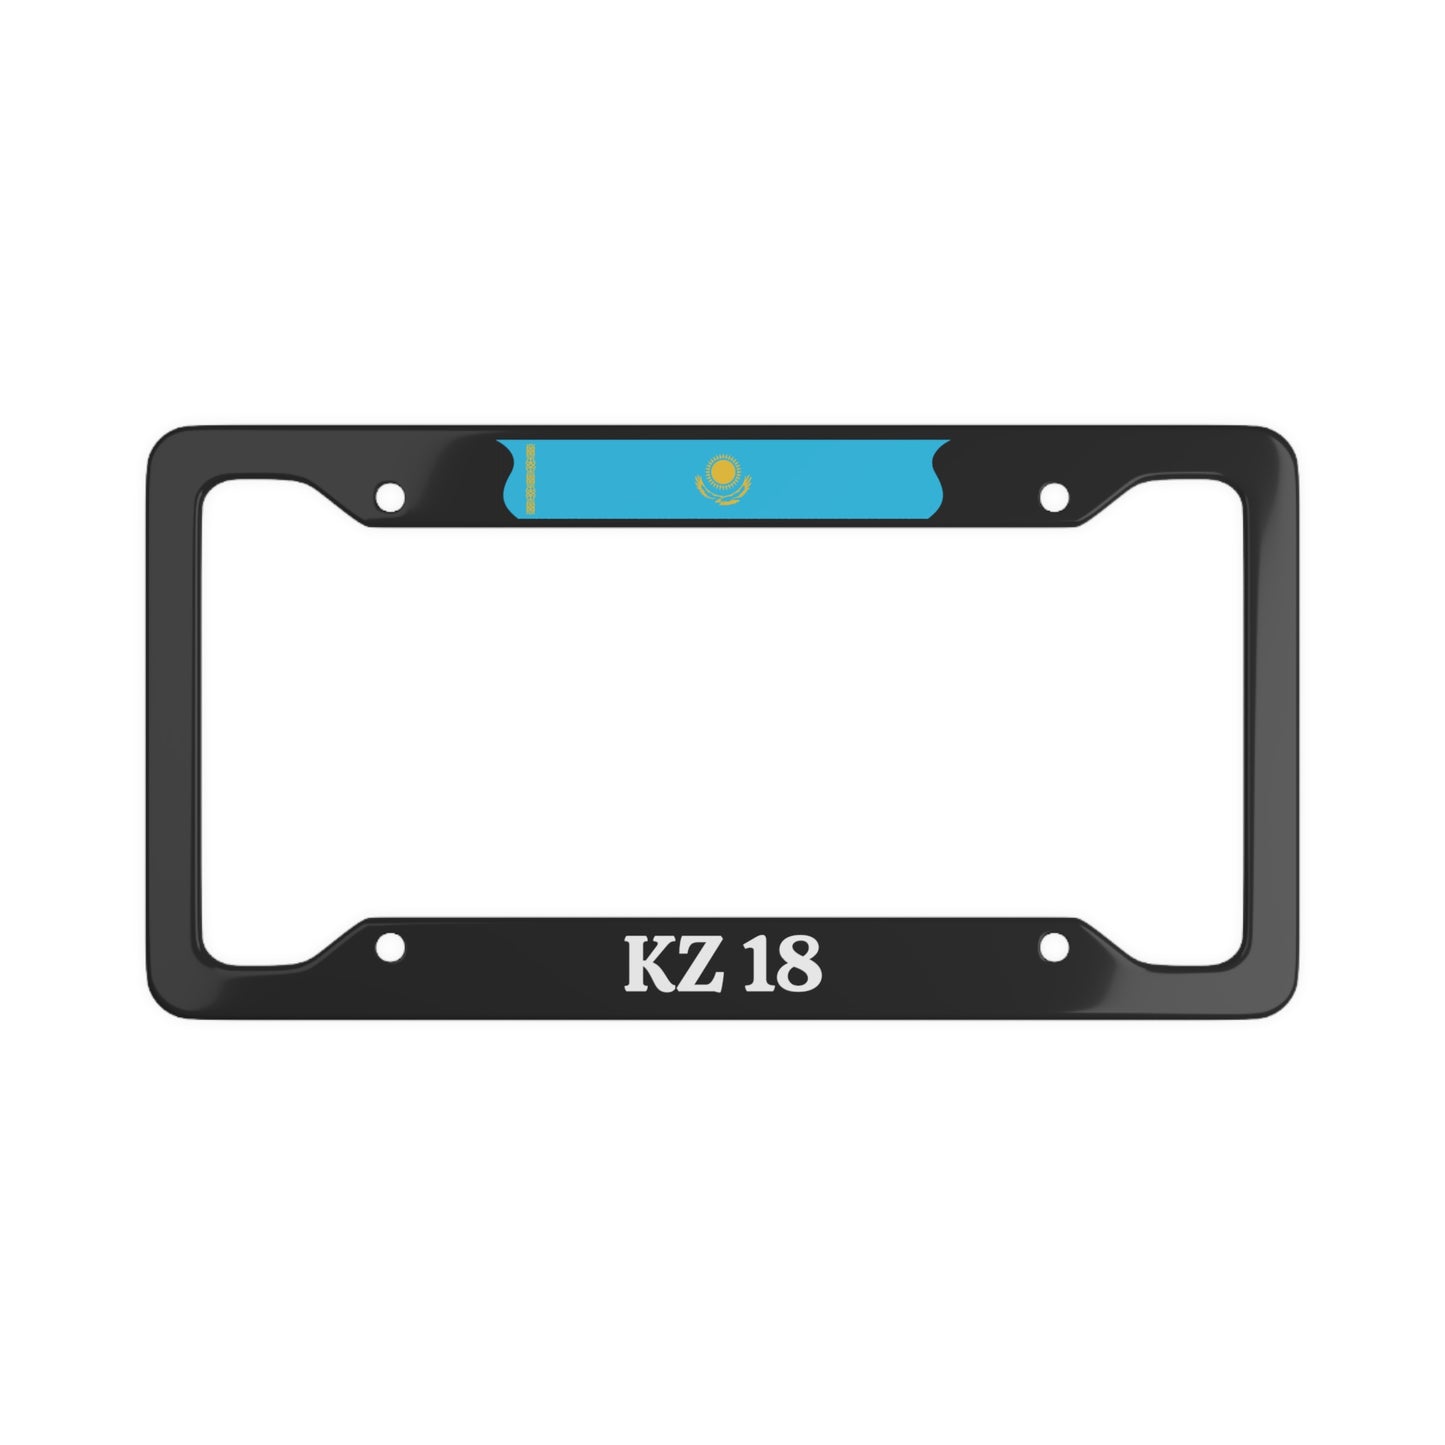 KZ 18 License Plate Frame